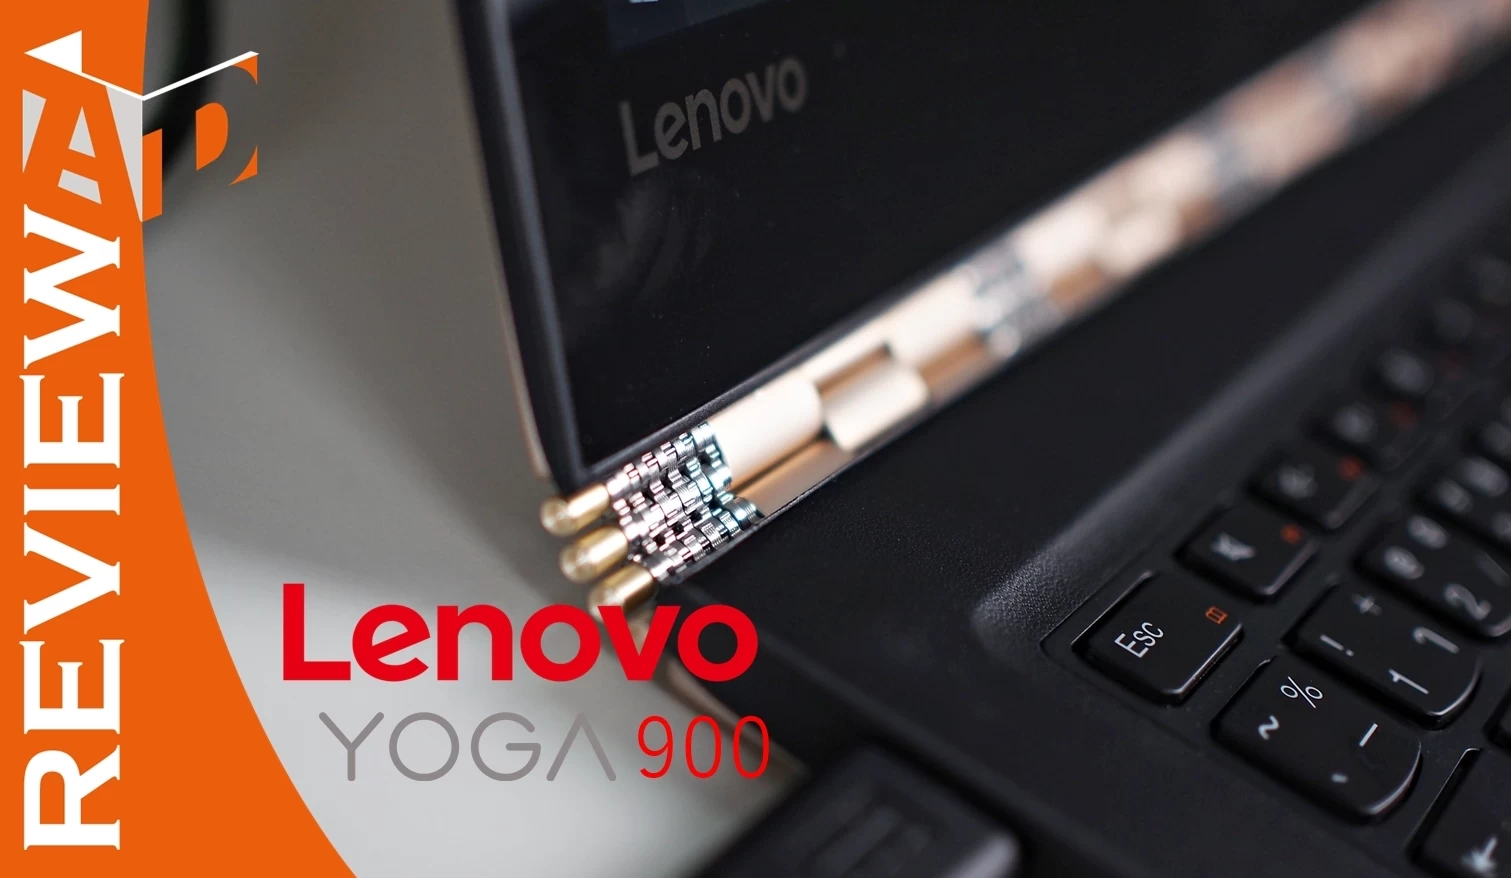 review Lenovo yoga 900 | Notebook | มินิรีวิว Lenovo Yoga 900 อัลตร้าบุ๊คระดับสูง  หรู แรง แพงสมค่าตัว